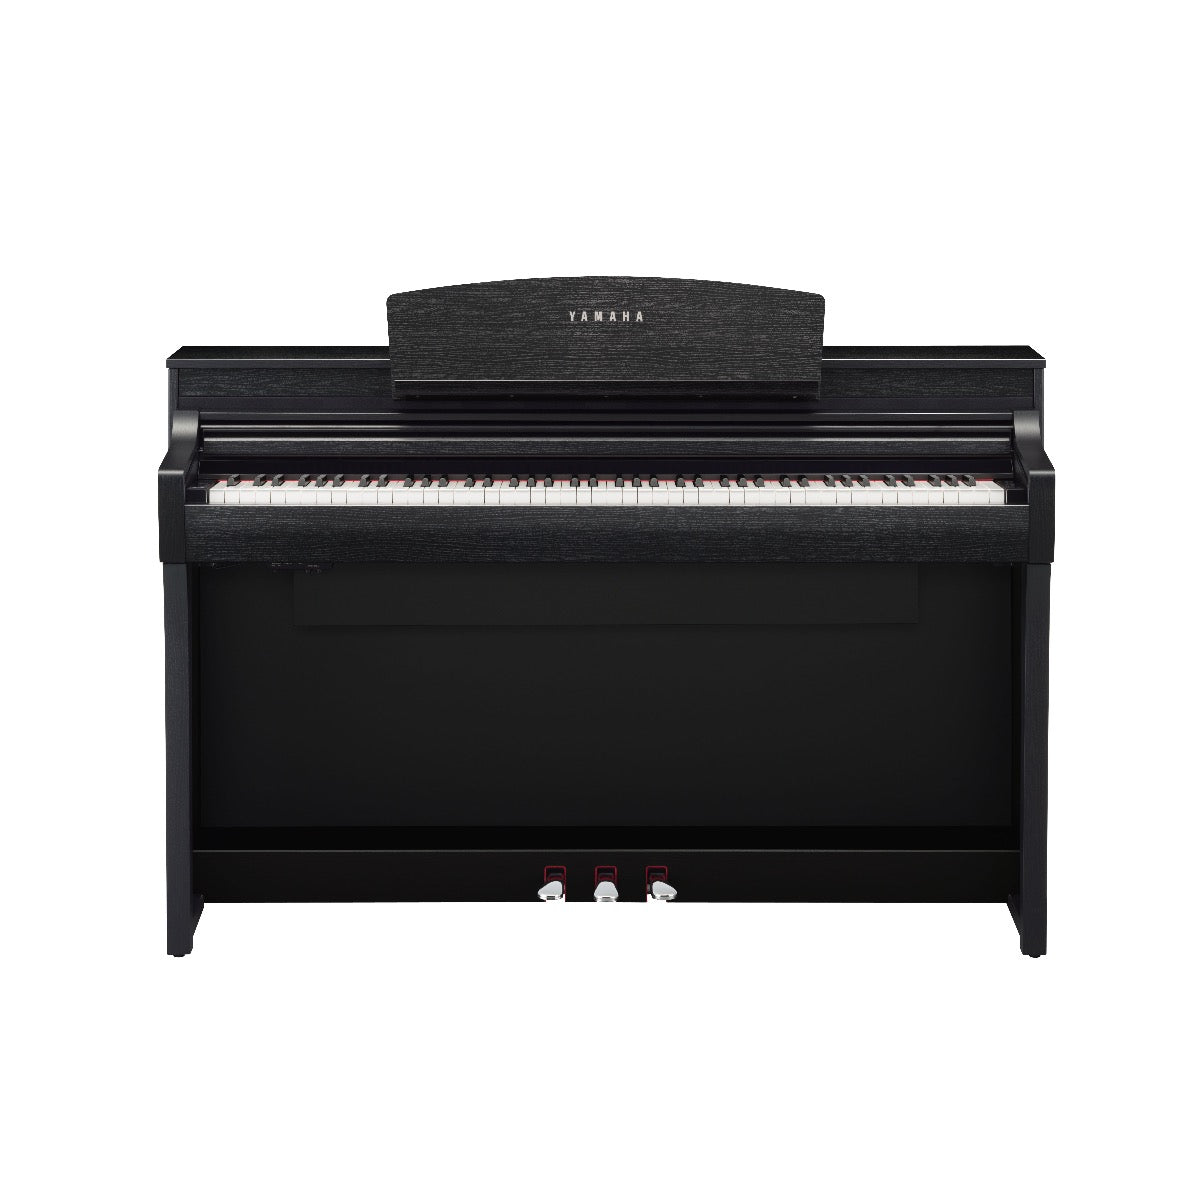 Yamaha Clavinova CSP275B Digital Piano with Bench - Black Walnut, View 3